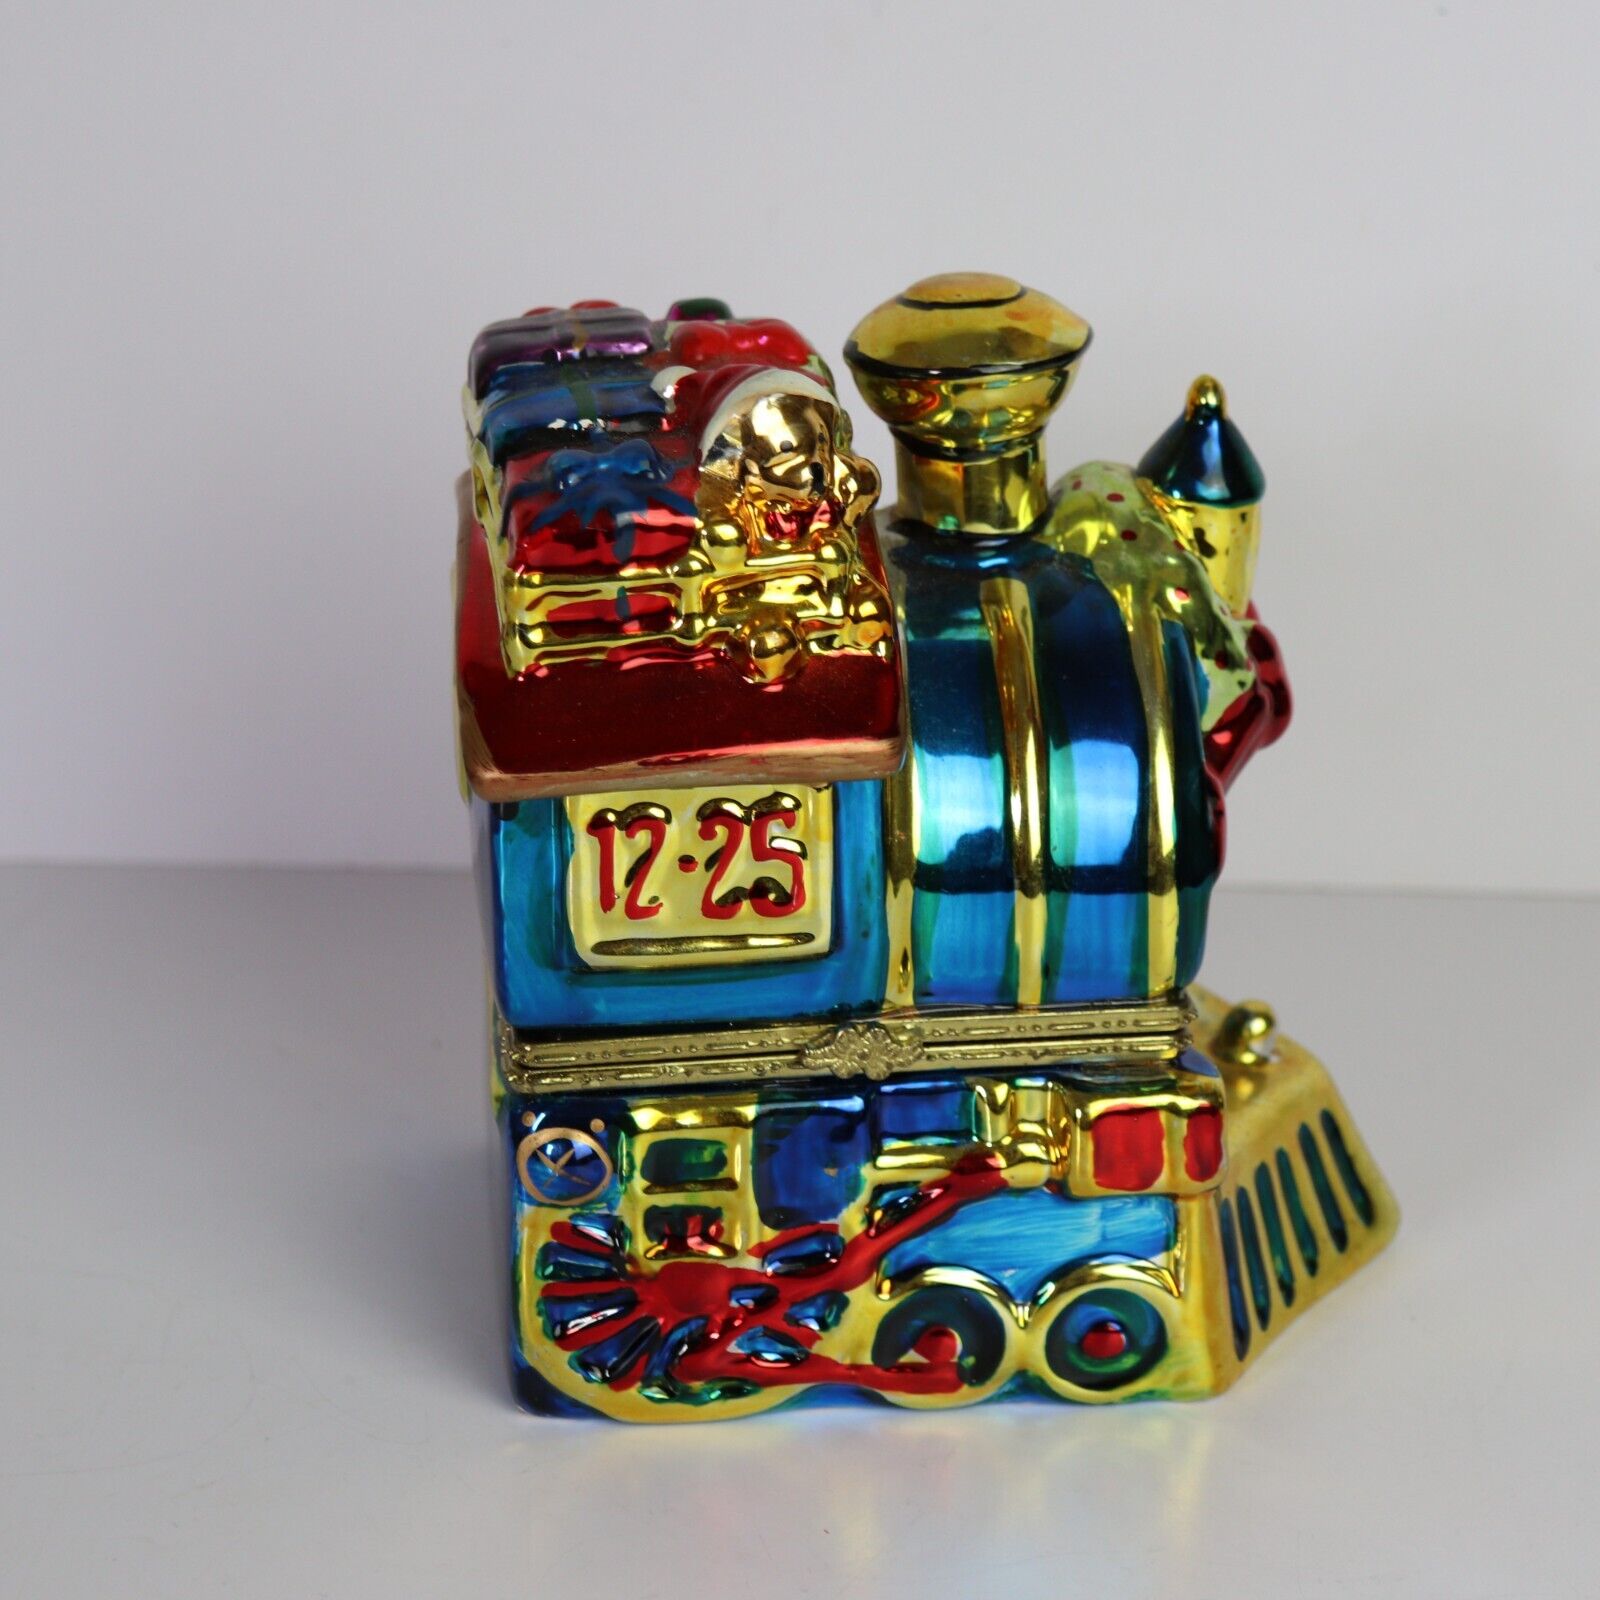 Mr Christmas Vintage Hinged Animated Train Music Box God Rest Ye Merry Gentlemen